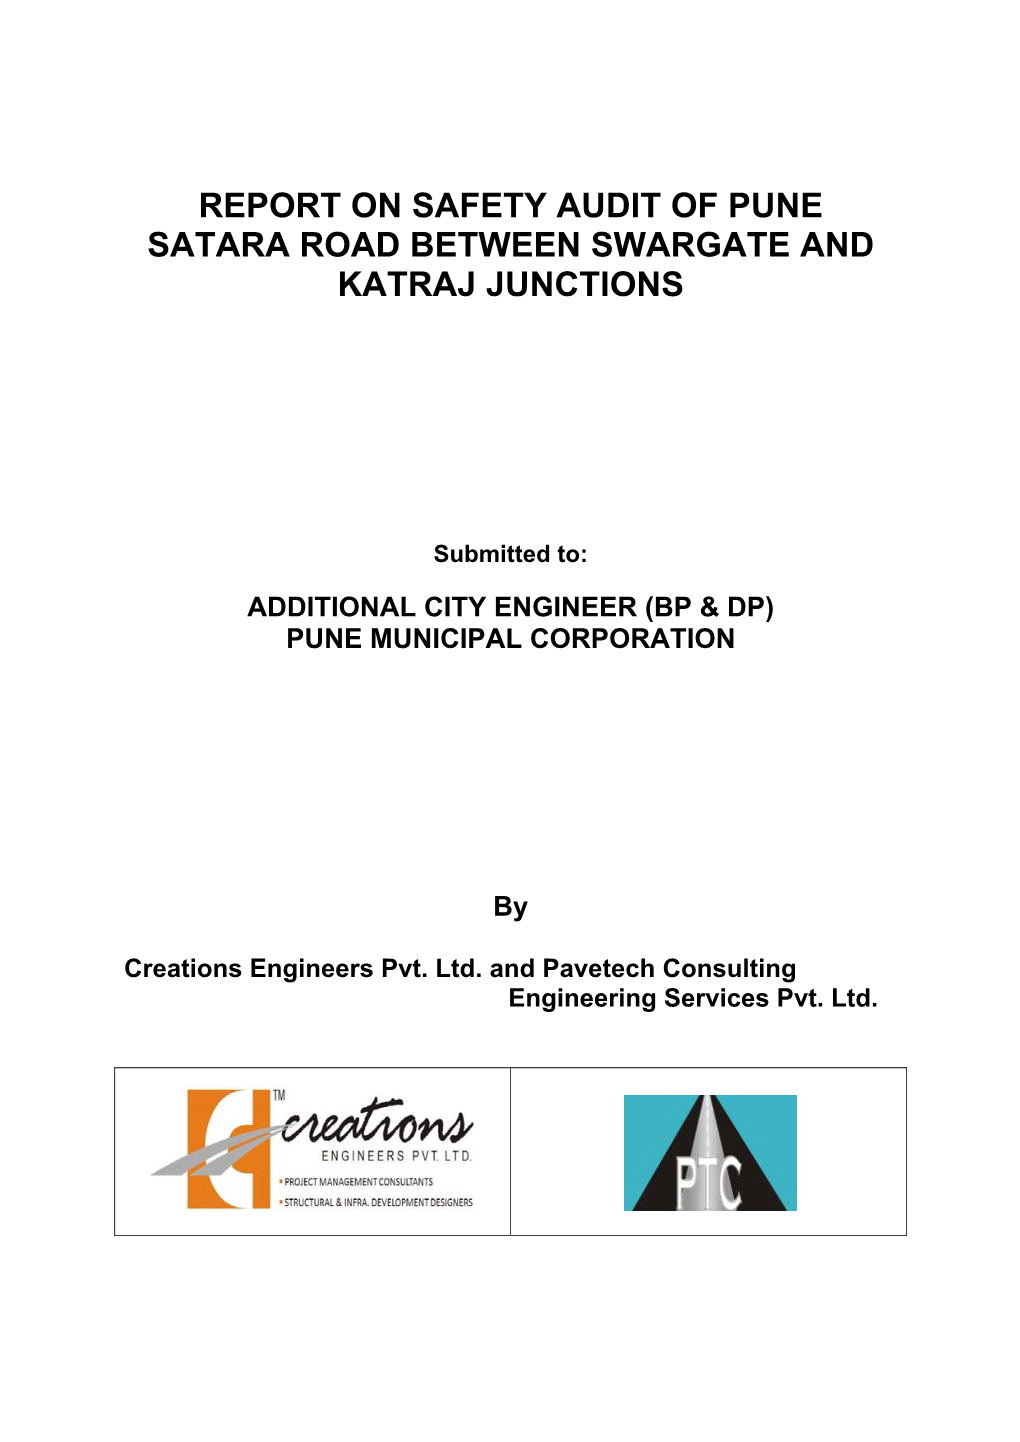 Report on Safety Audit of Pune Satara Road Between Swargate and Katraj Junctions